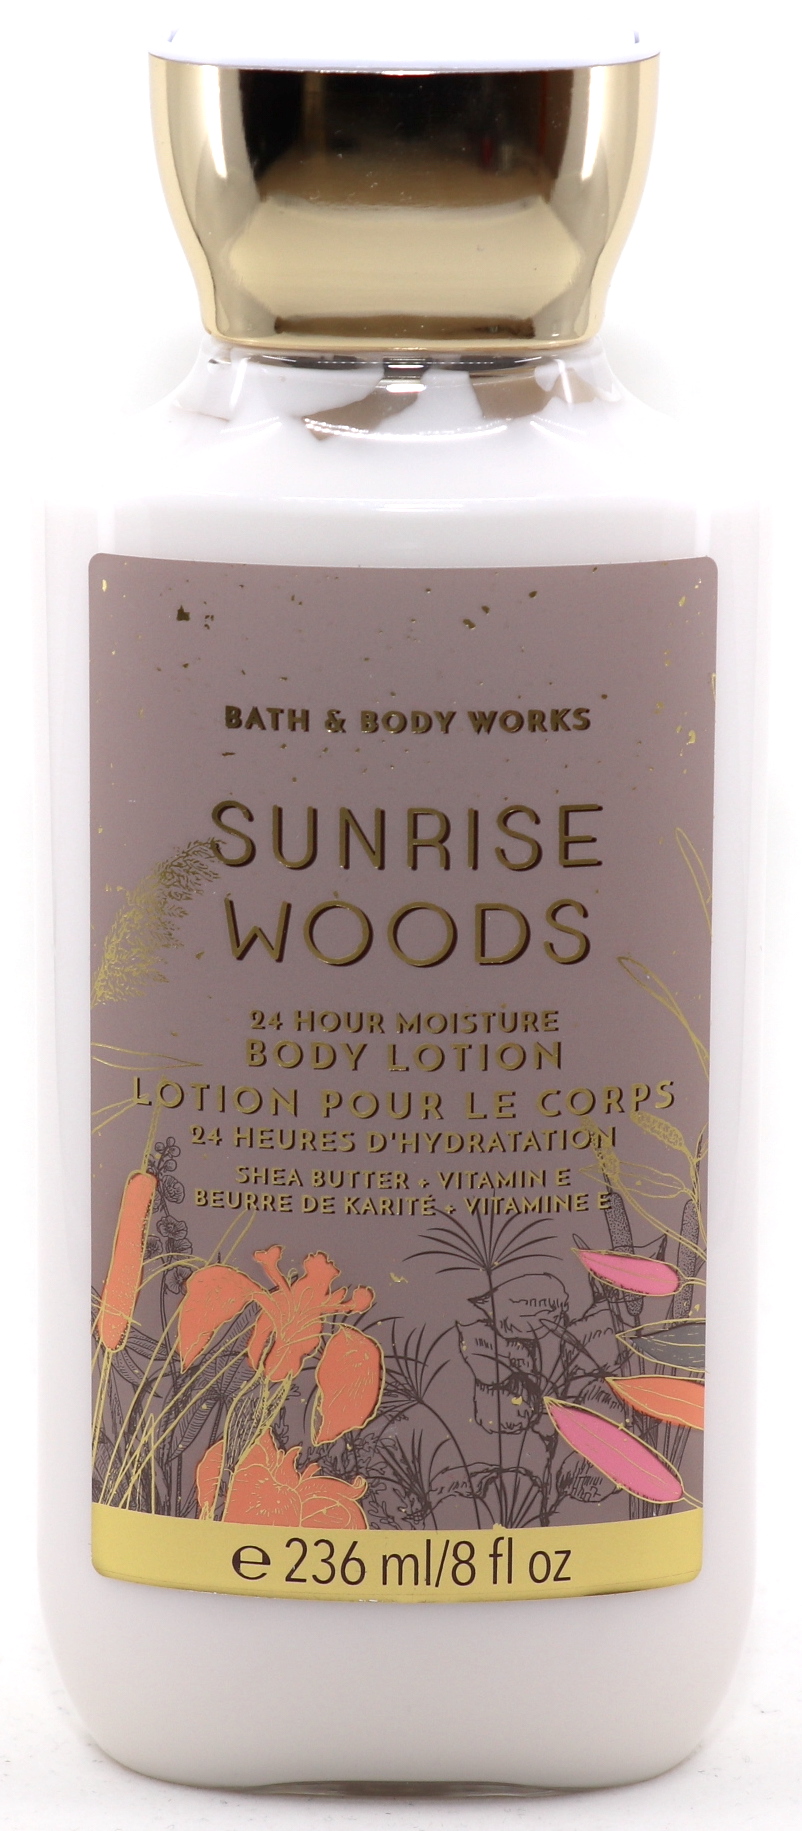 Bath & Body Works Sunrise Woods Body Lotion